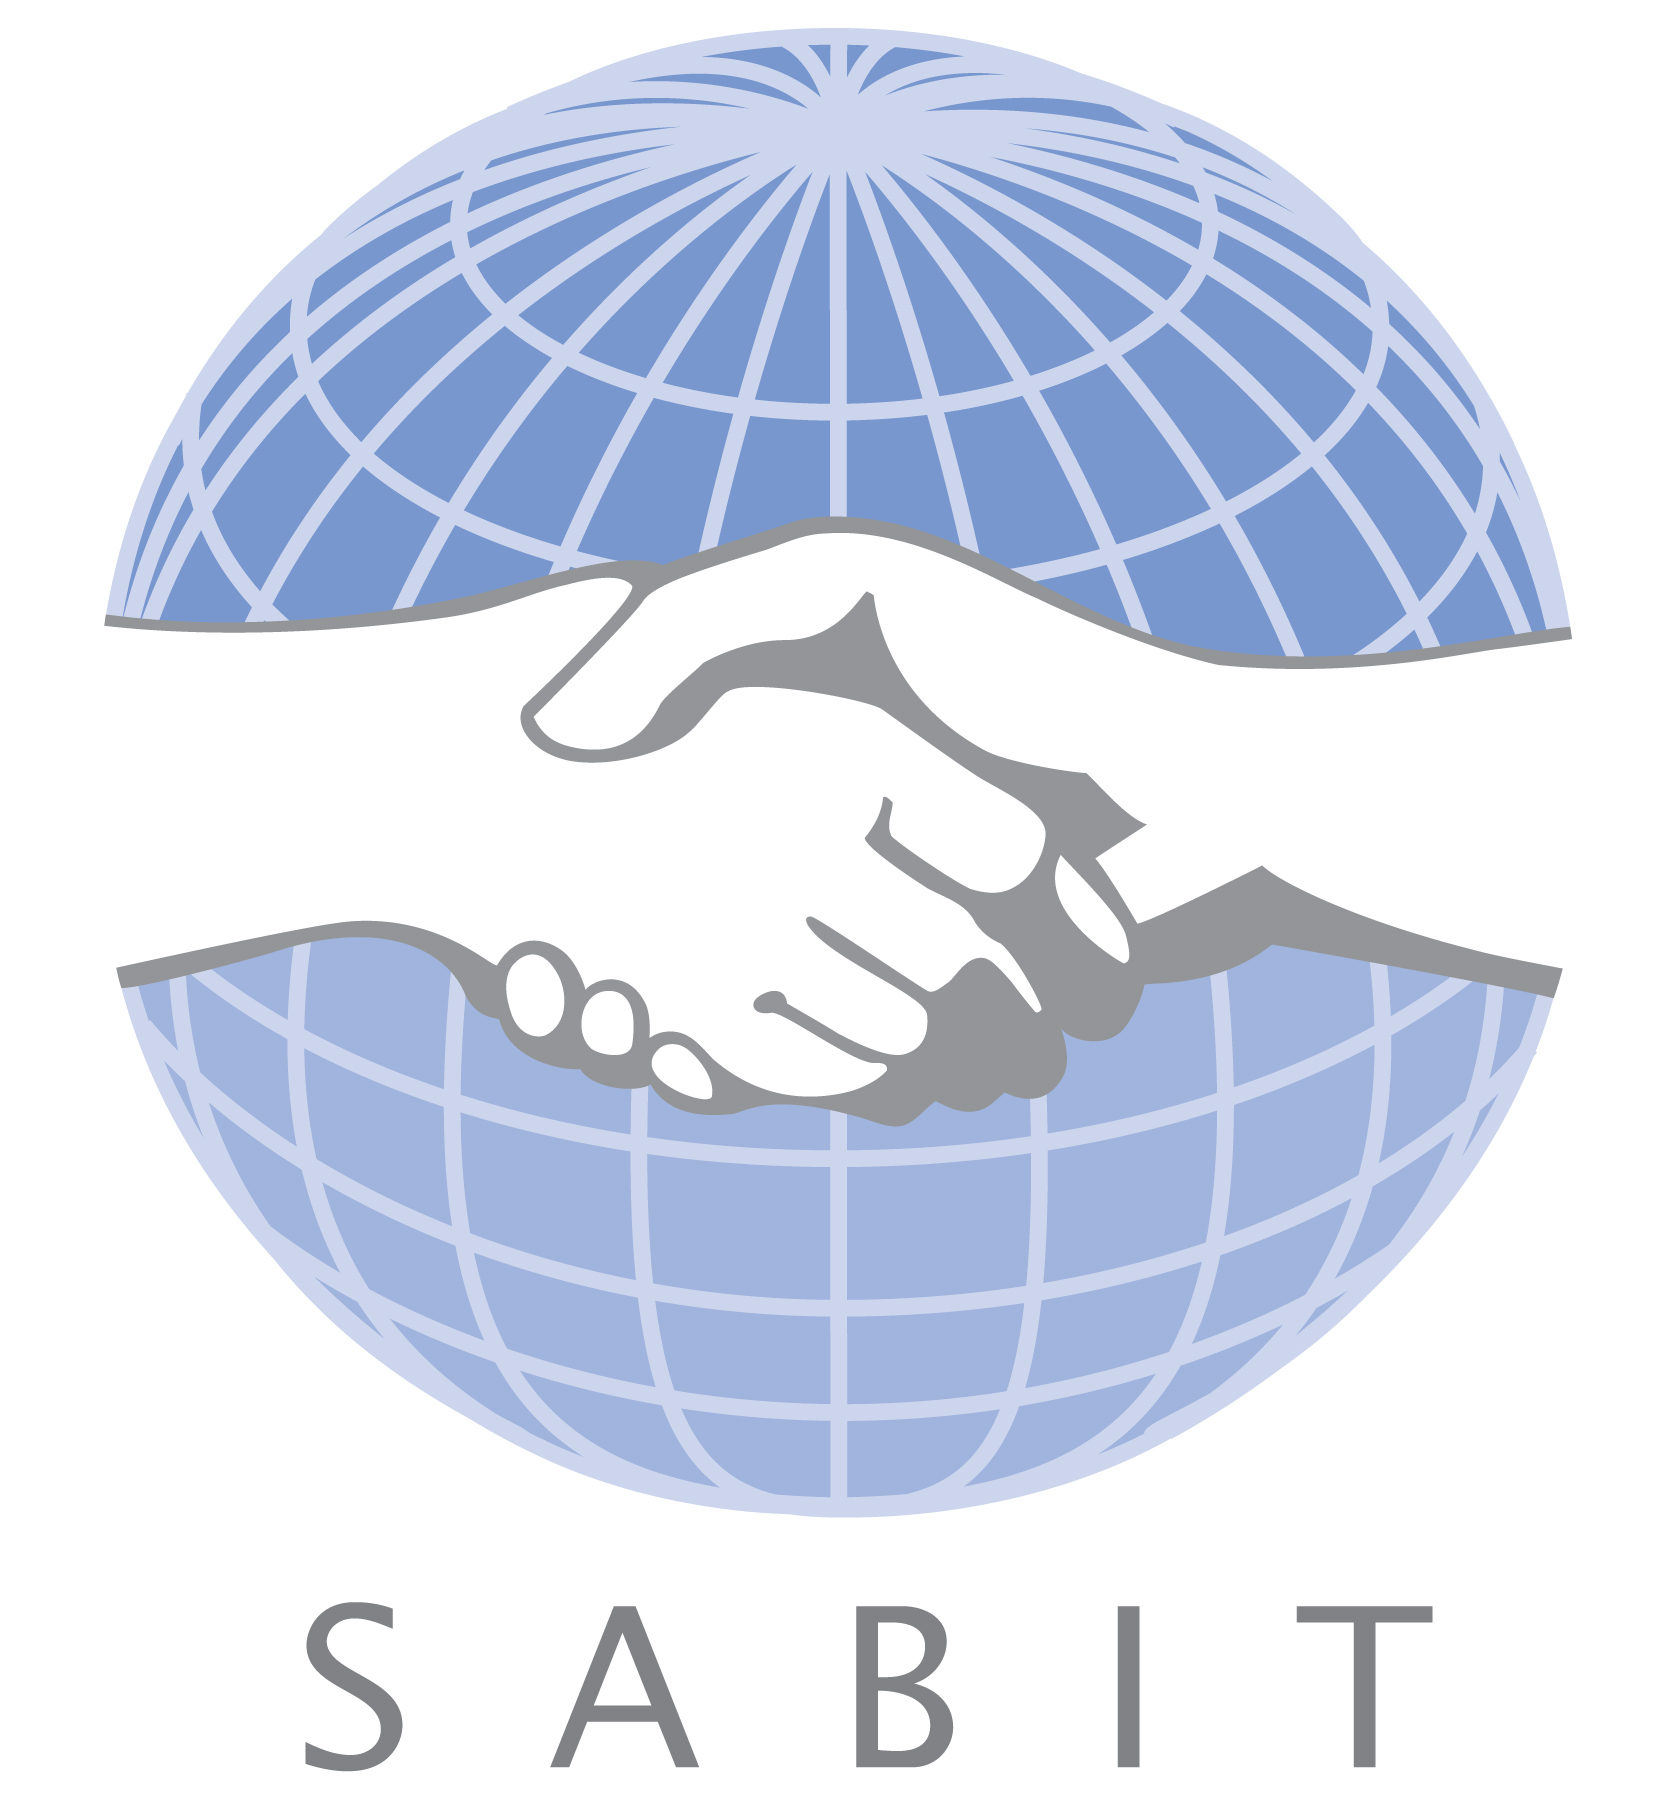 U.S. Department of Commerce - SABIT Program logo